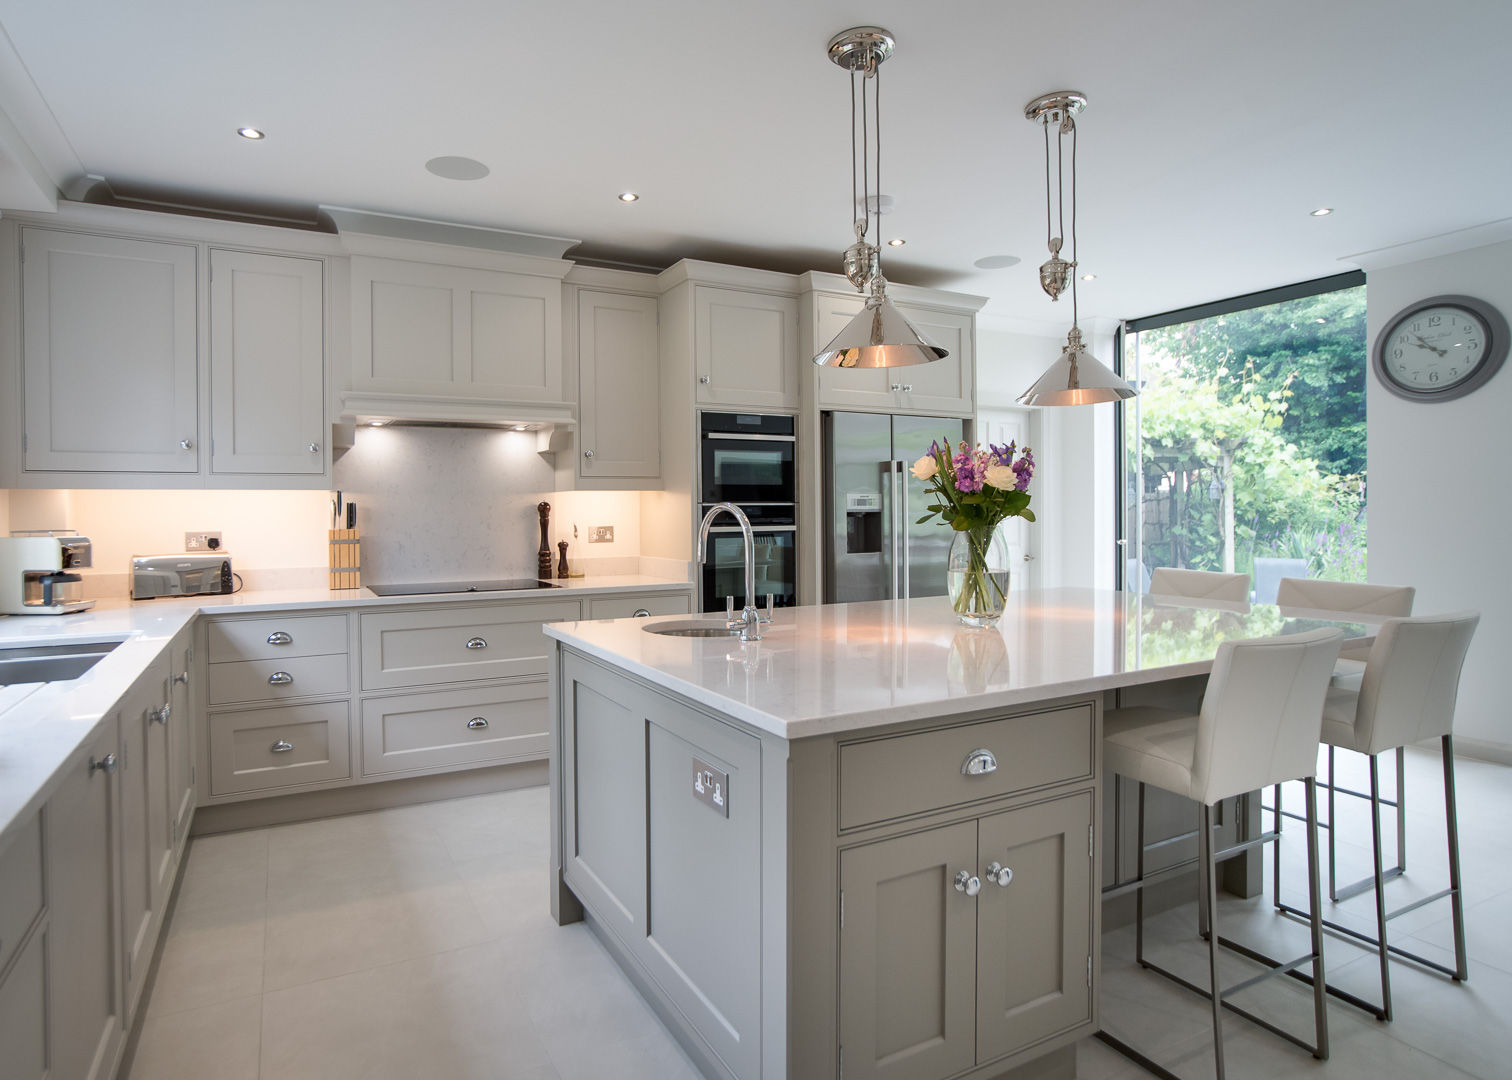 Luxurious, bespoke kitchen by John Ladbury John Ladbury and Company Built-in kitchens white,modern,minimalist,quartz